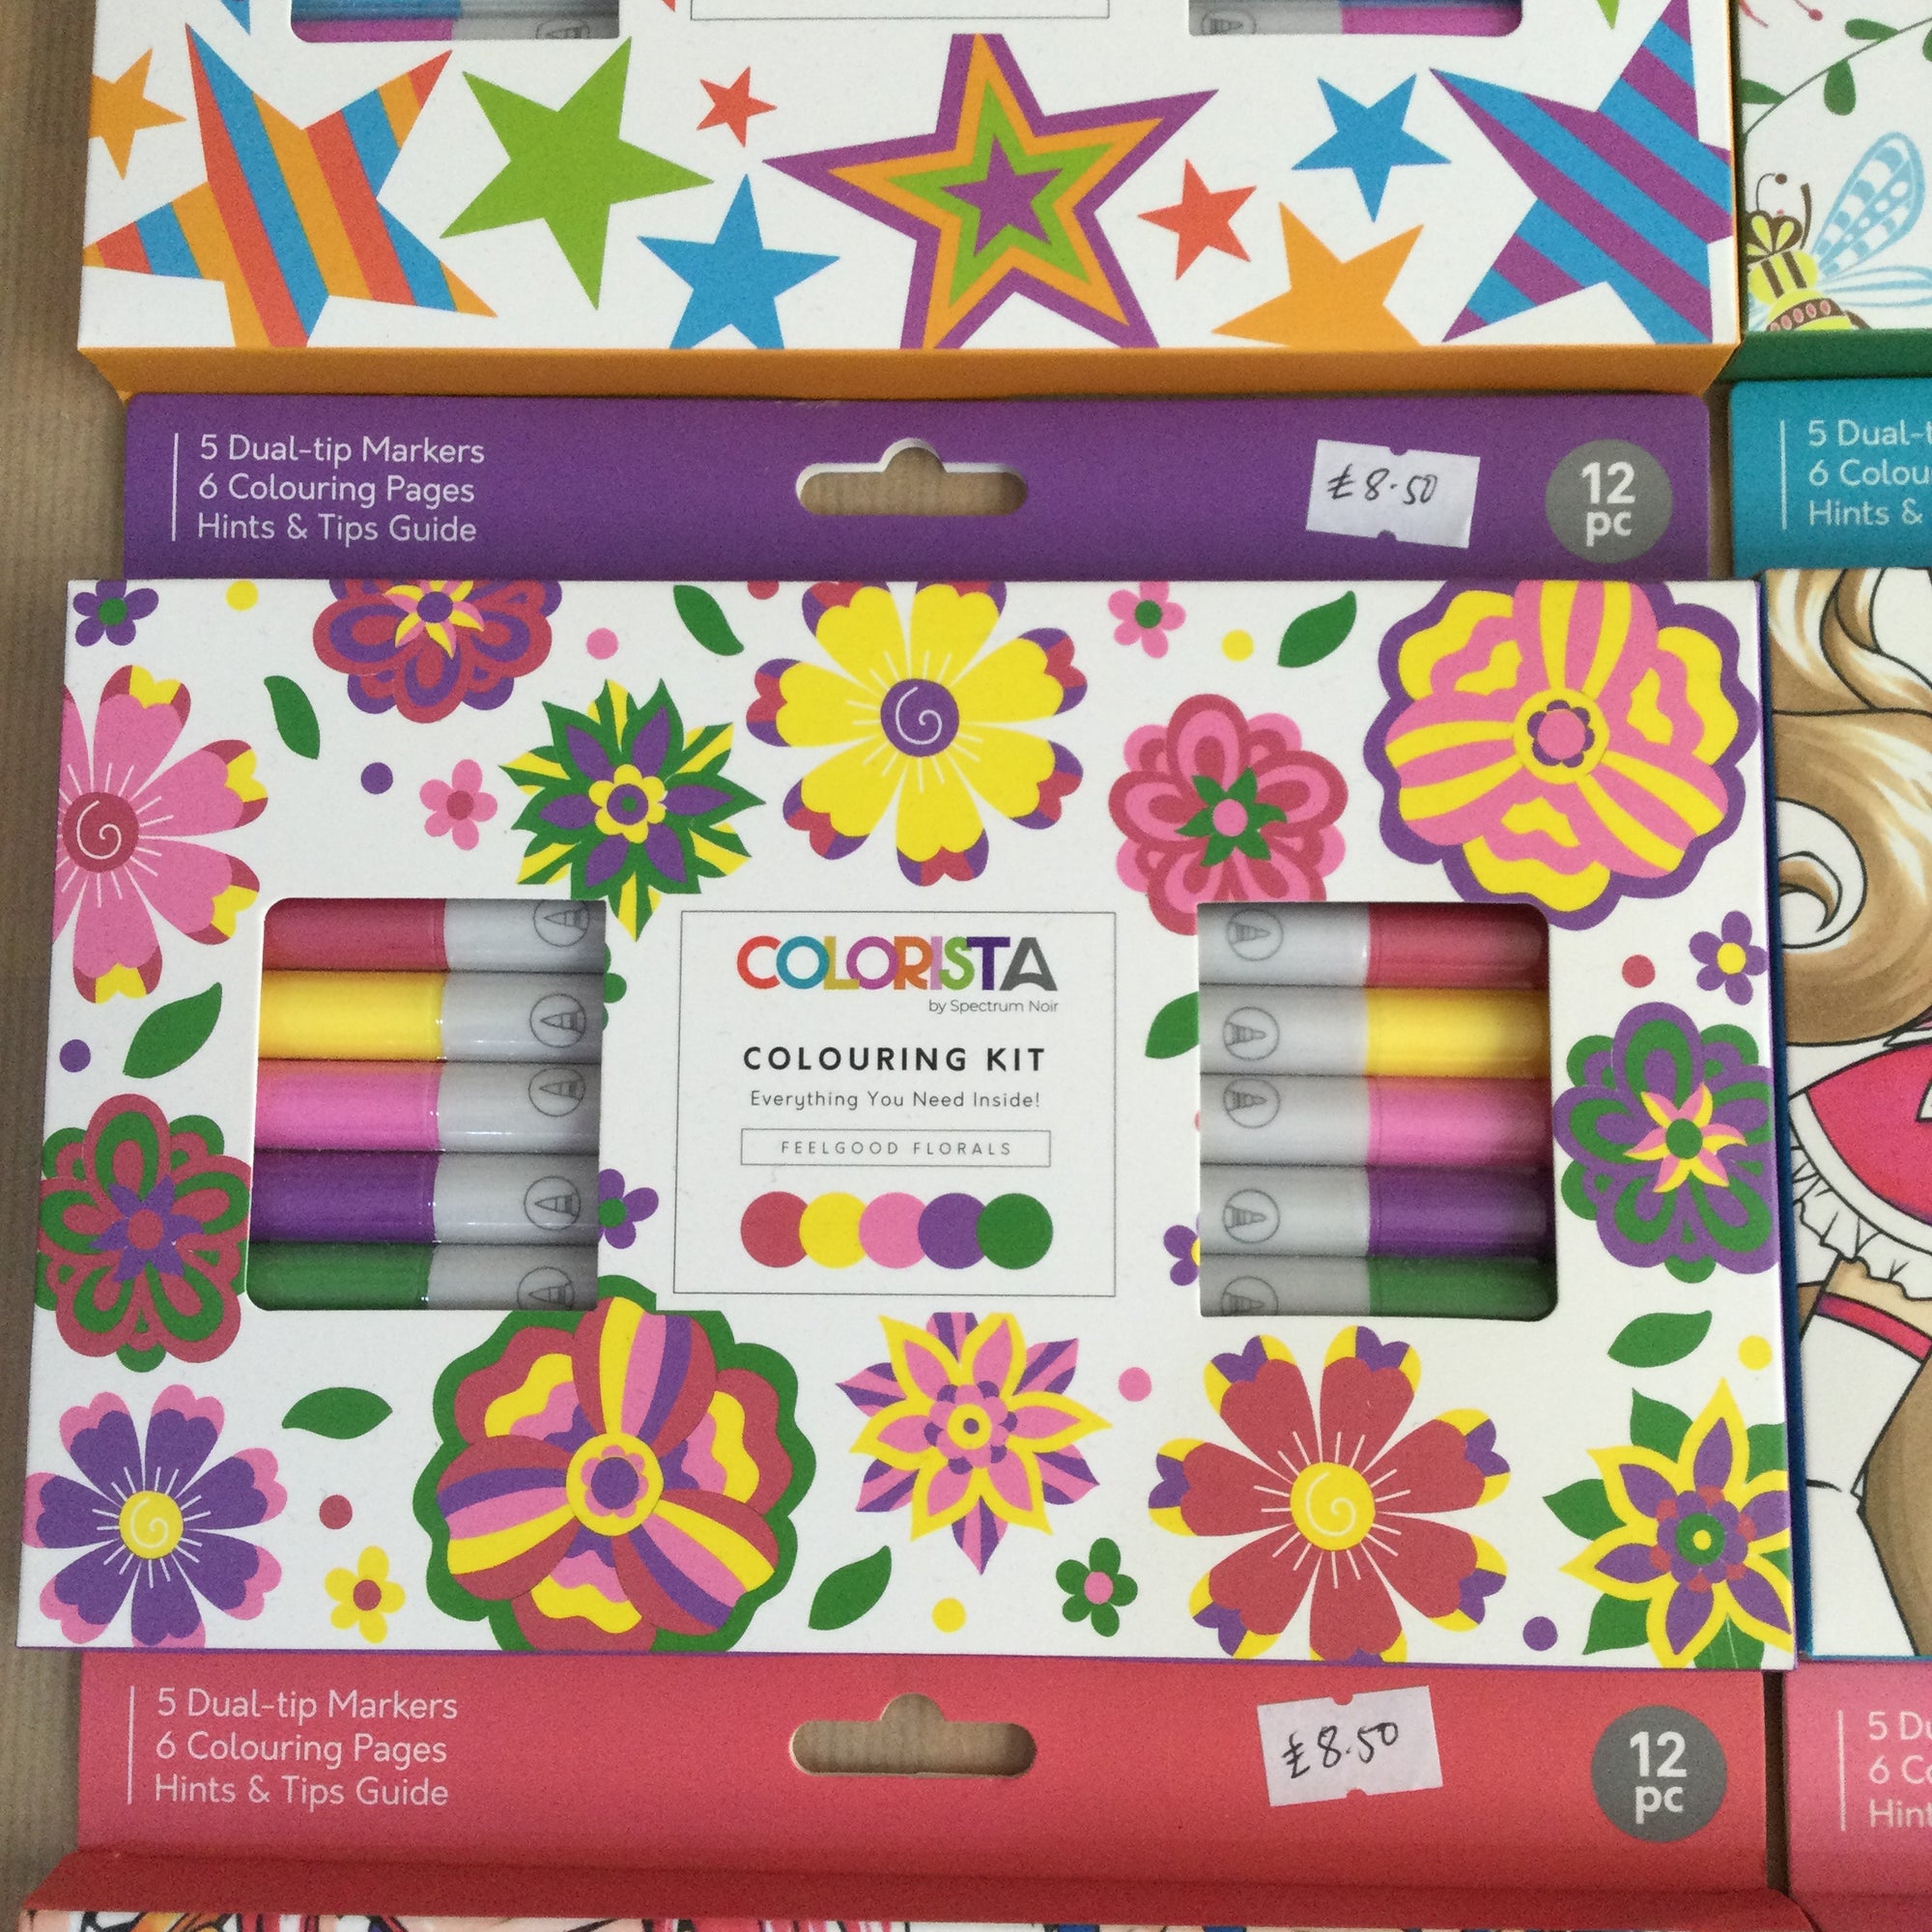 Colourista ~ Colouring Kit